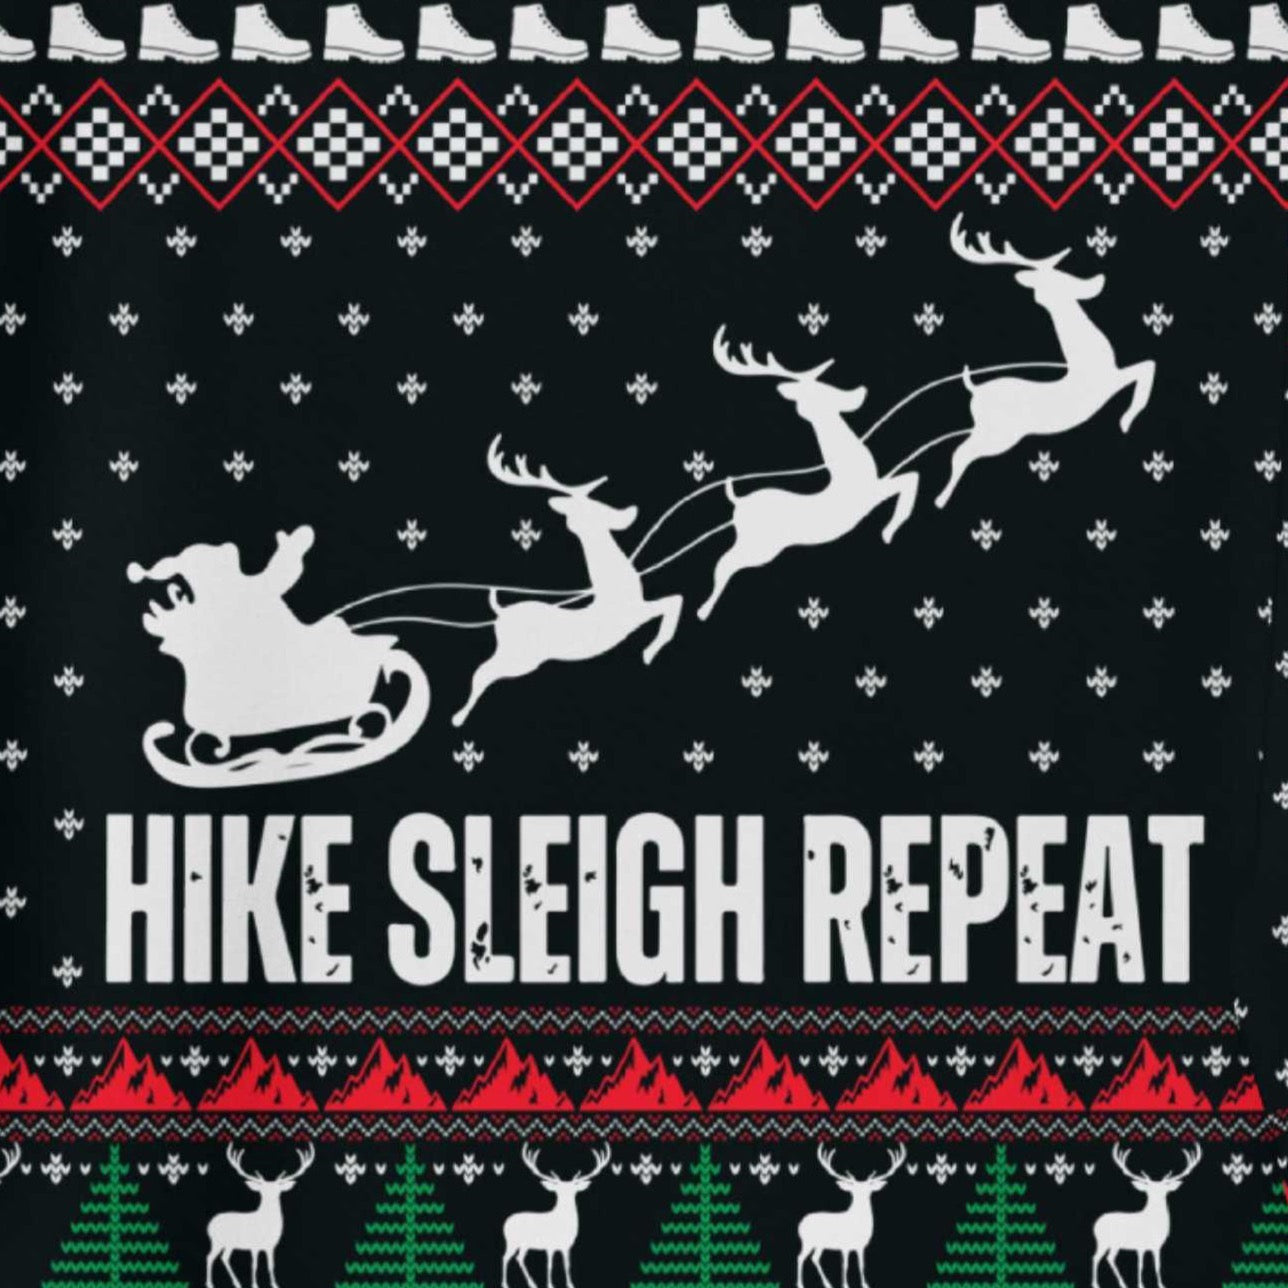 Hike Sleigh Repeat Ugly Christmas Sweatshirt - Adventure Threads Company